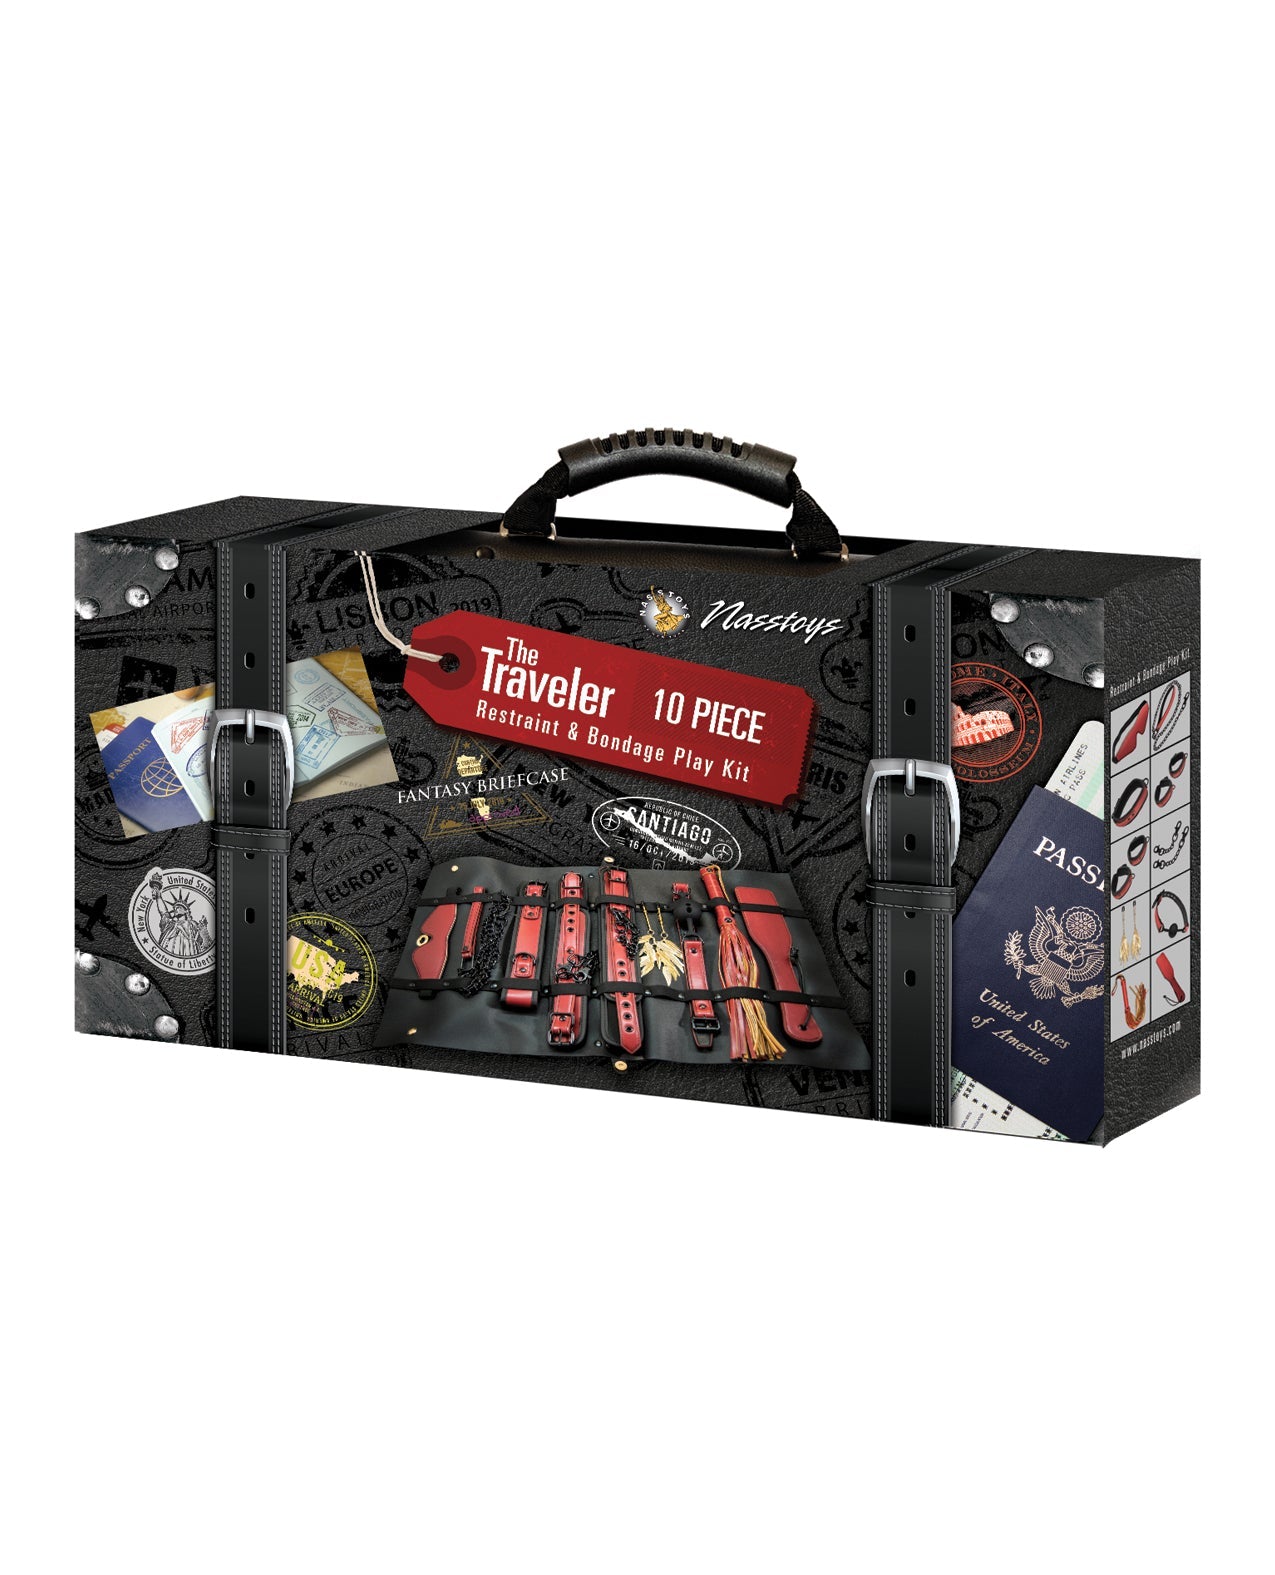 The Ultimate Fantasy Travel Briefcase Restraint &amp; Bondage Play Kit - Burgundy